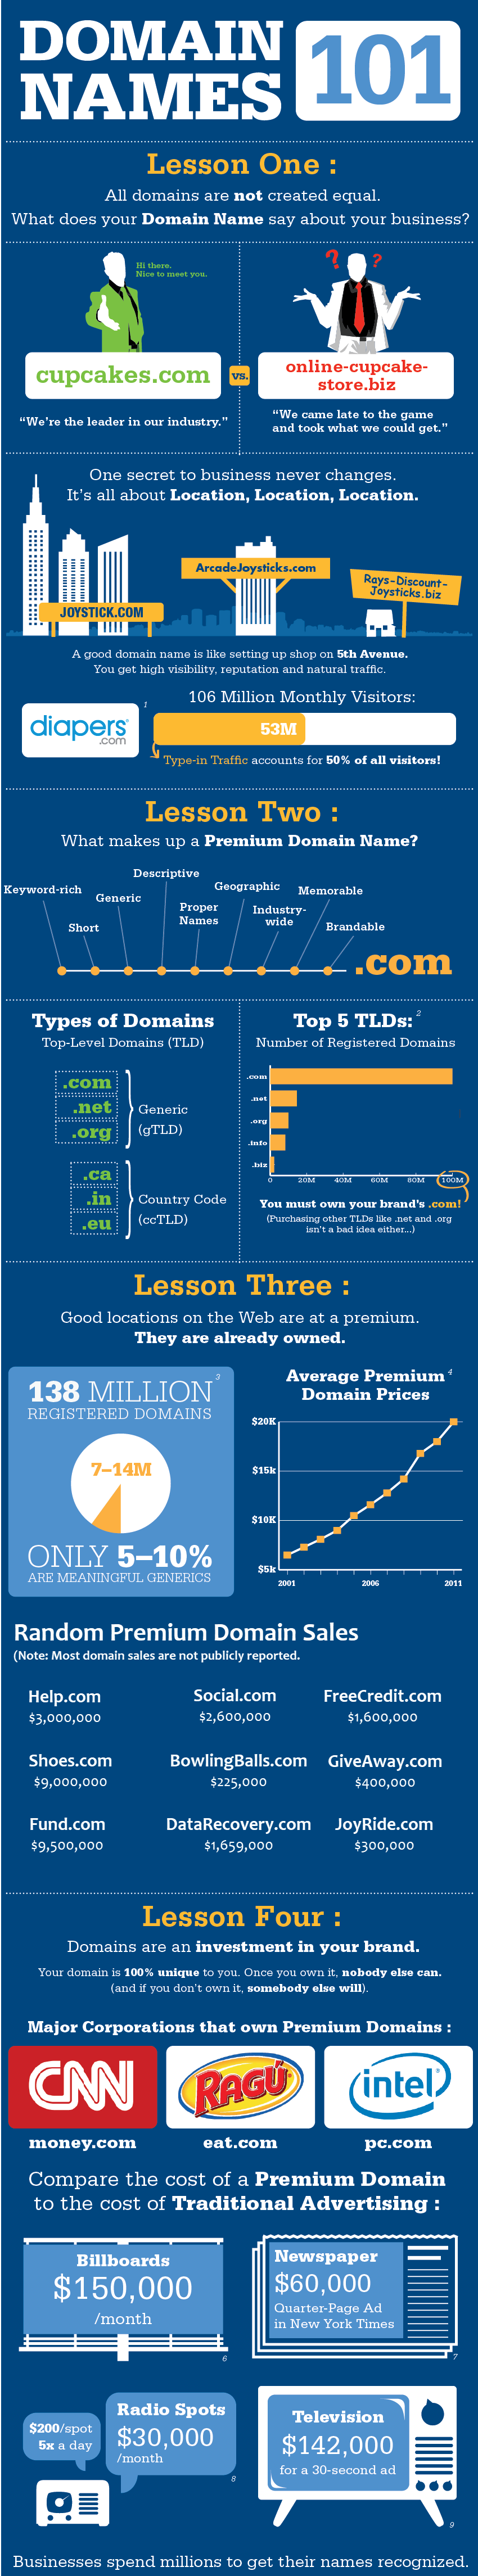 Domain Lessons 1-4